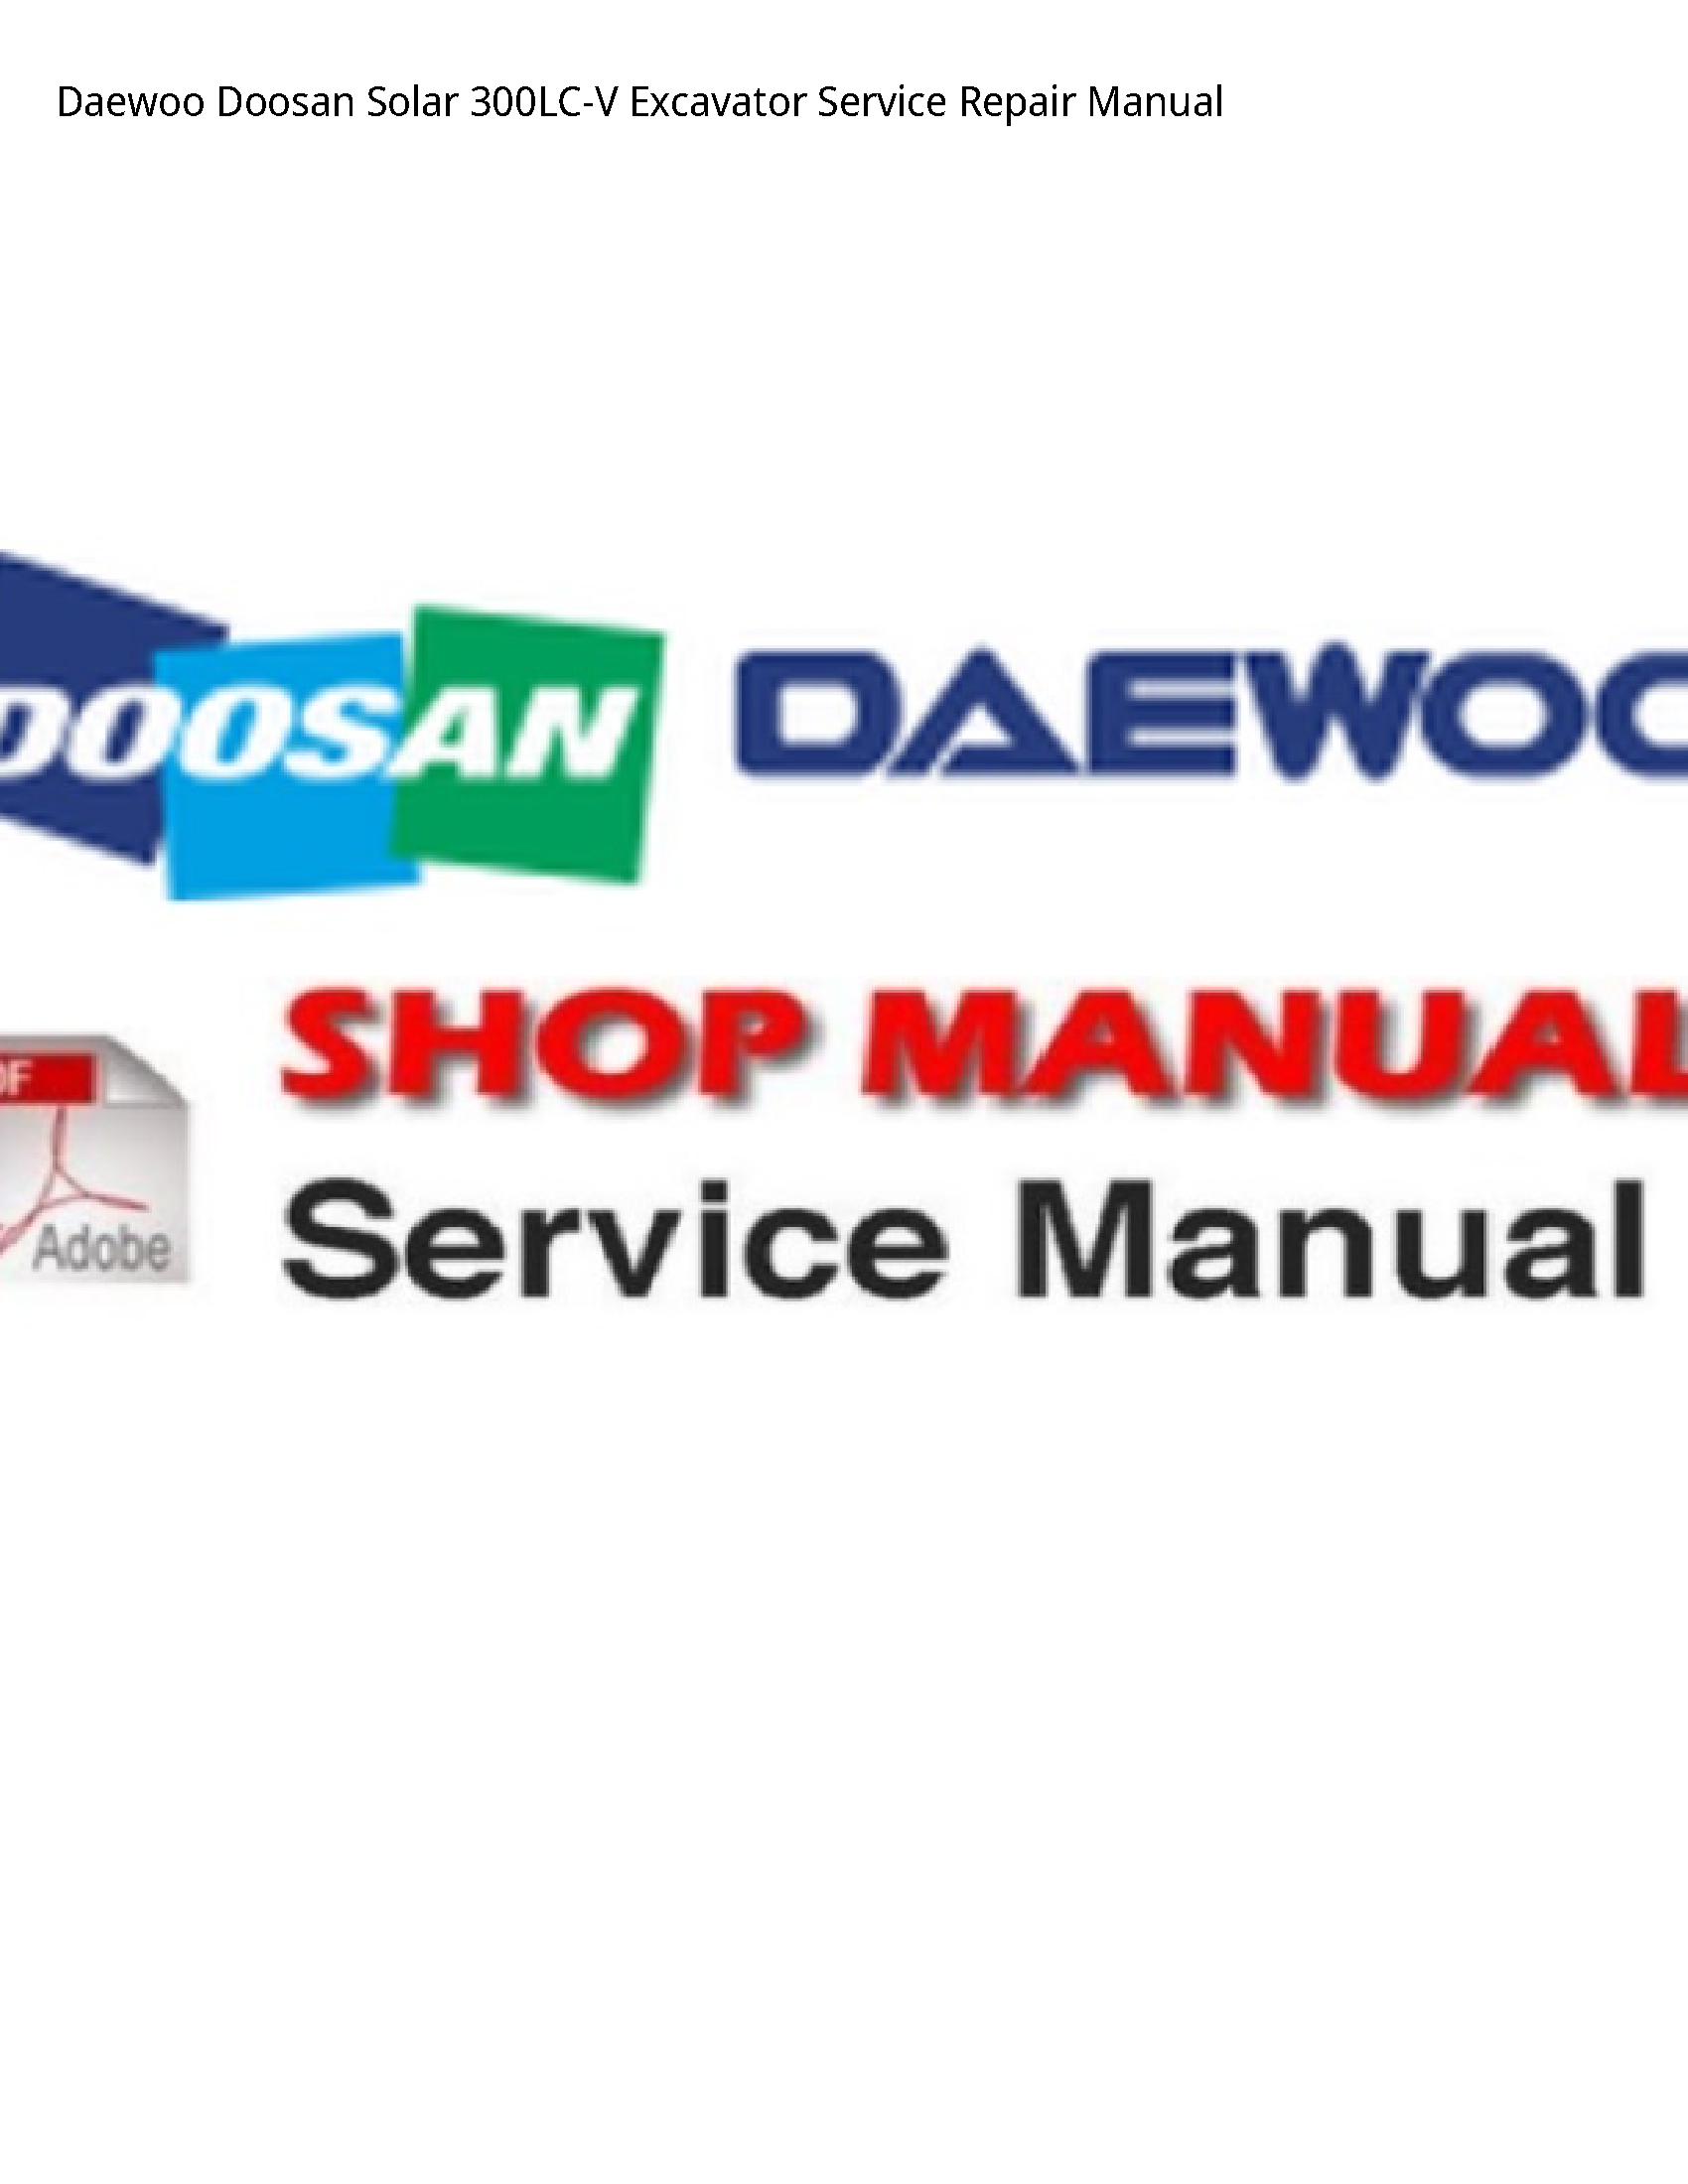 Daewoo Doosan 300LC-V Solar Excavator manual